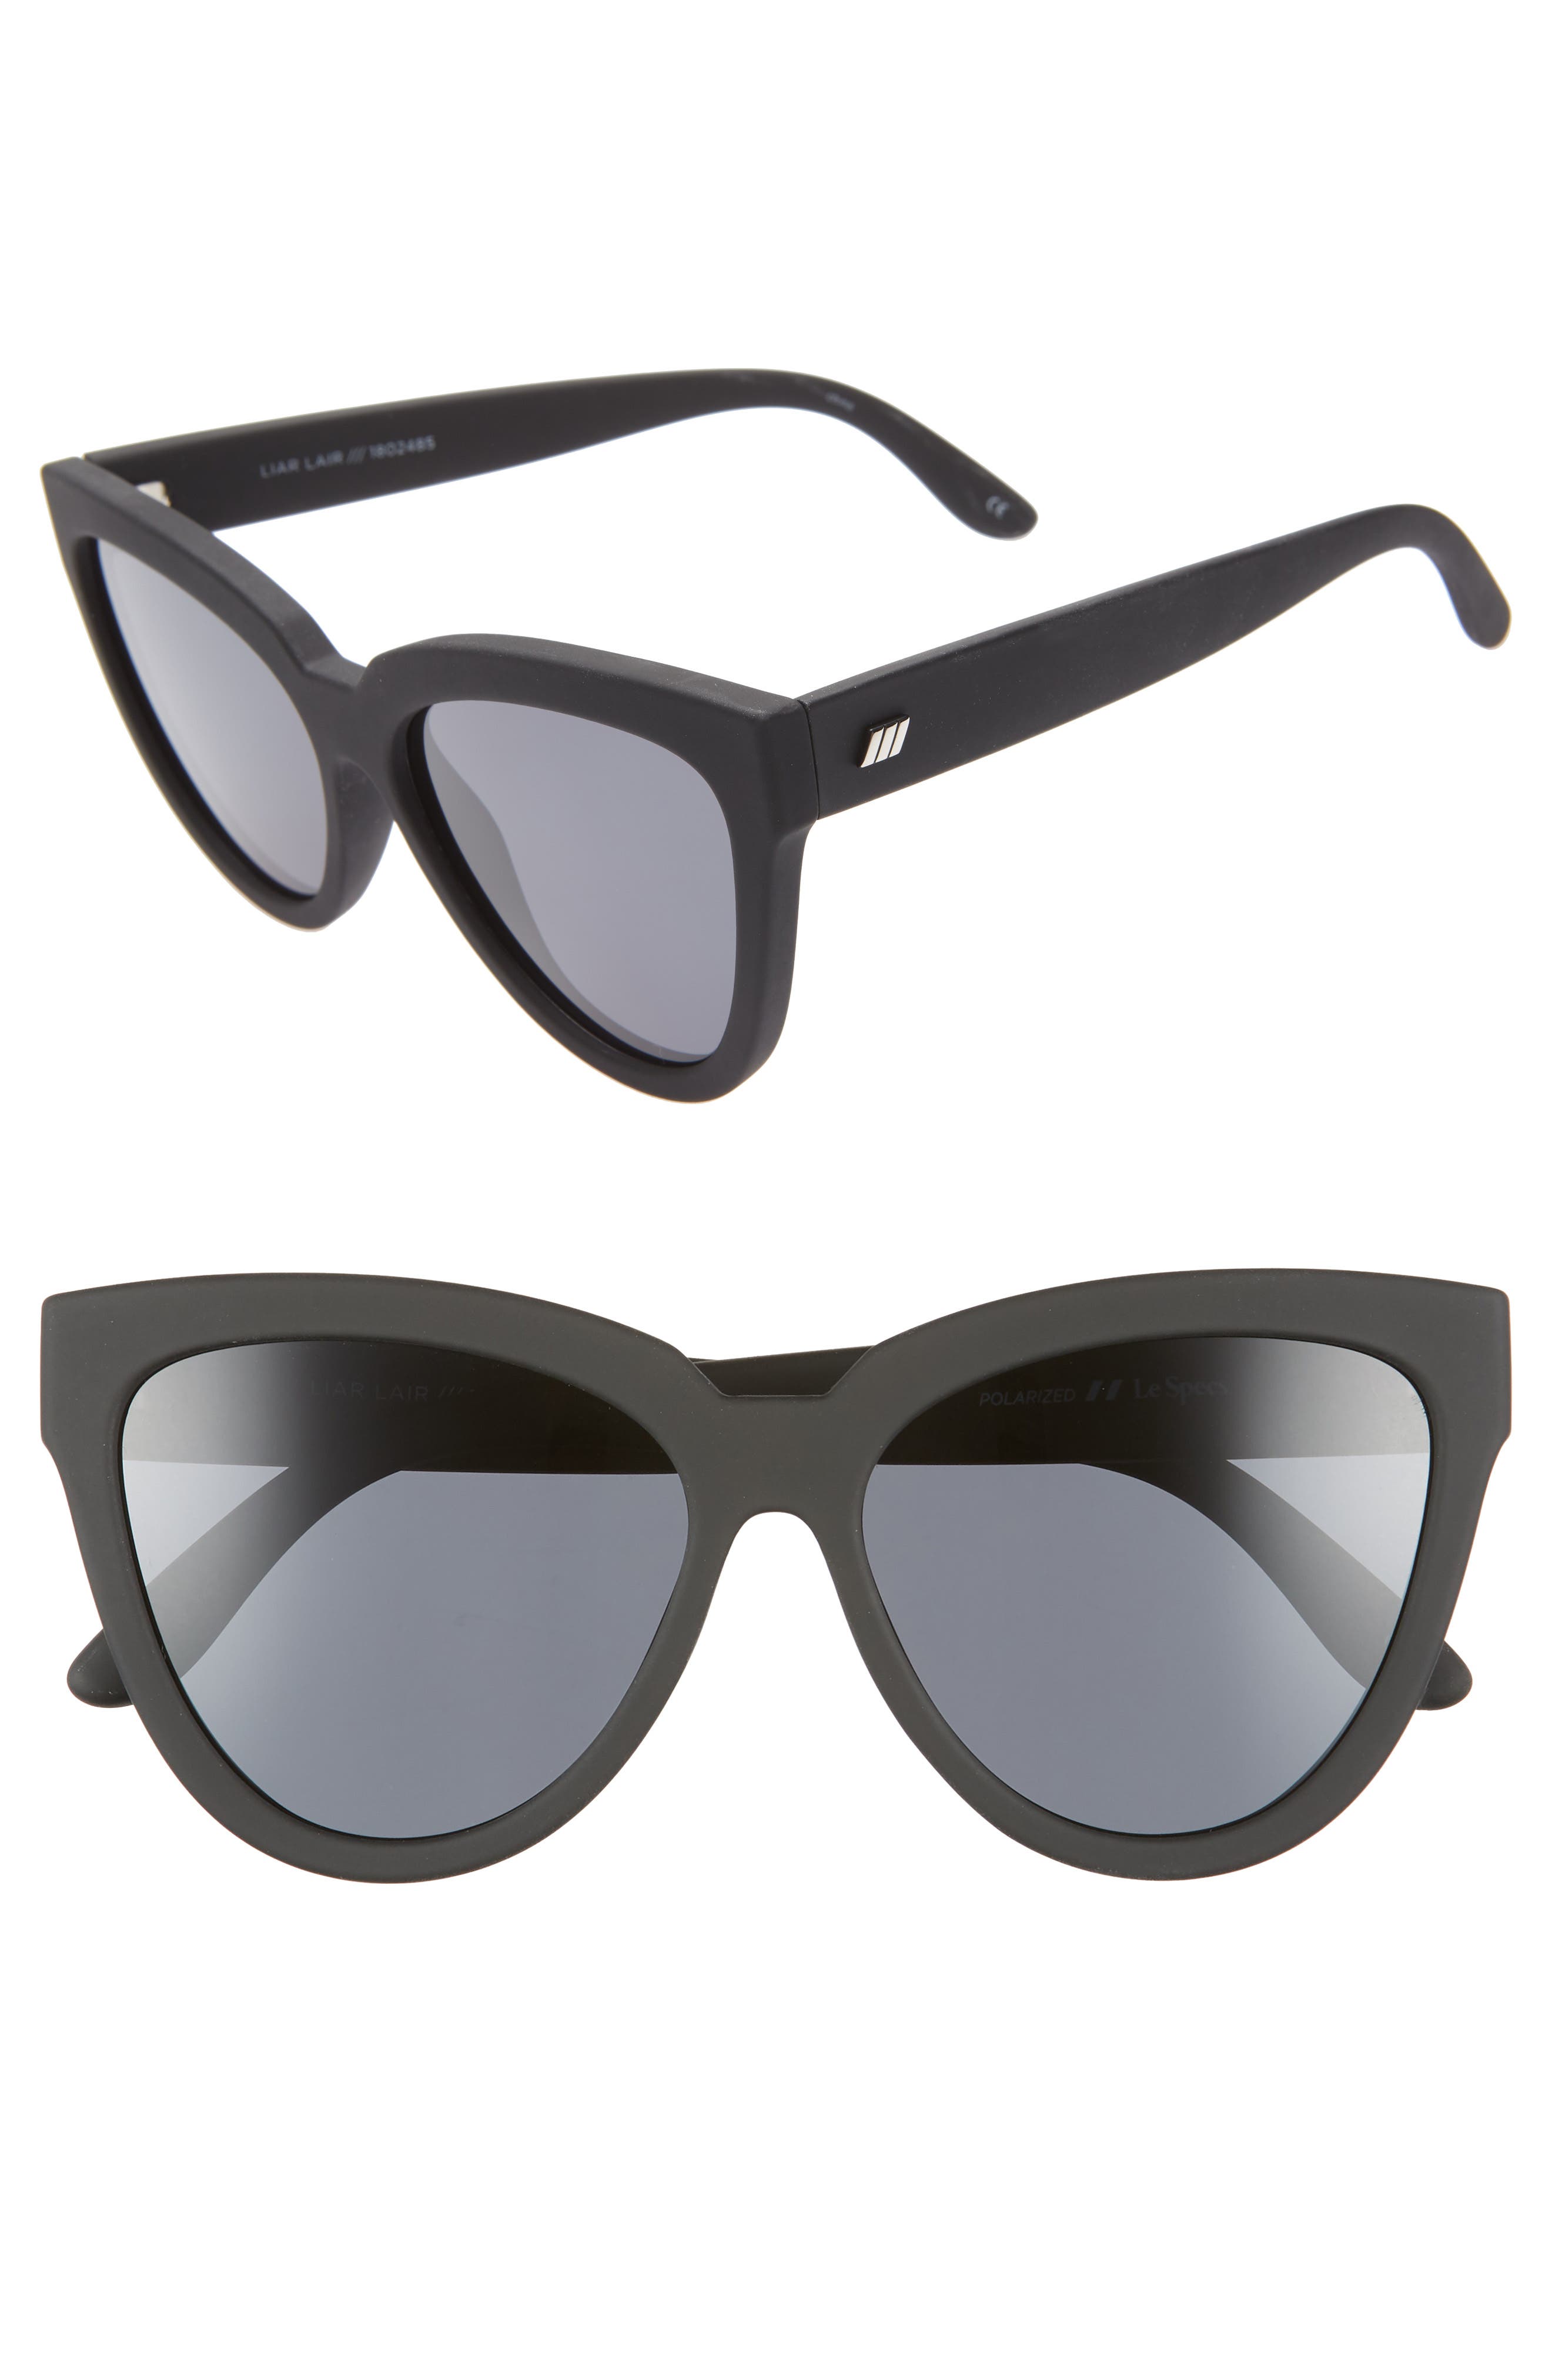 USA Men’s & Women’s Unisex Sunglasses 9595 Free Shipping